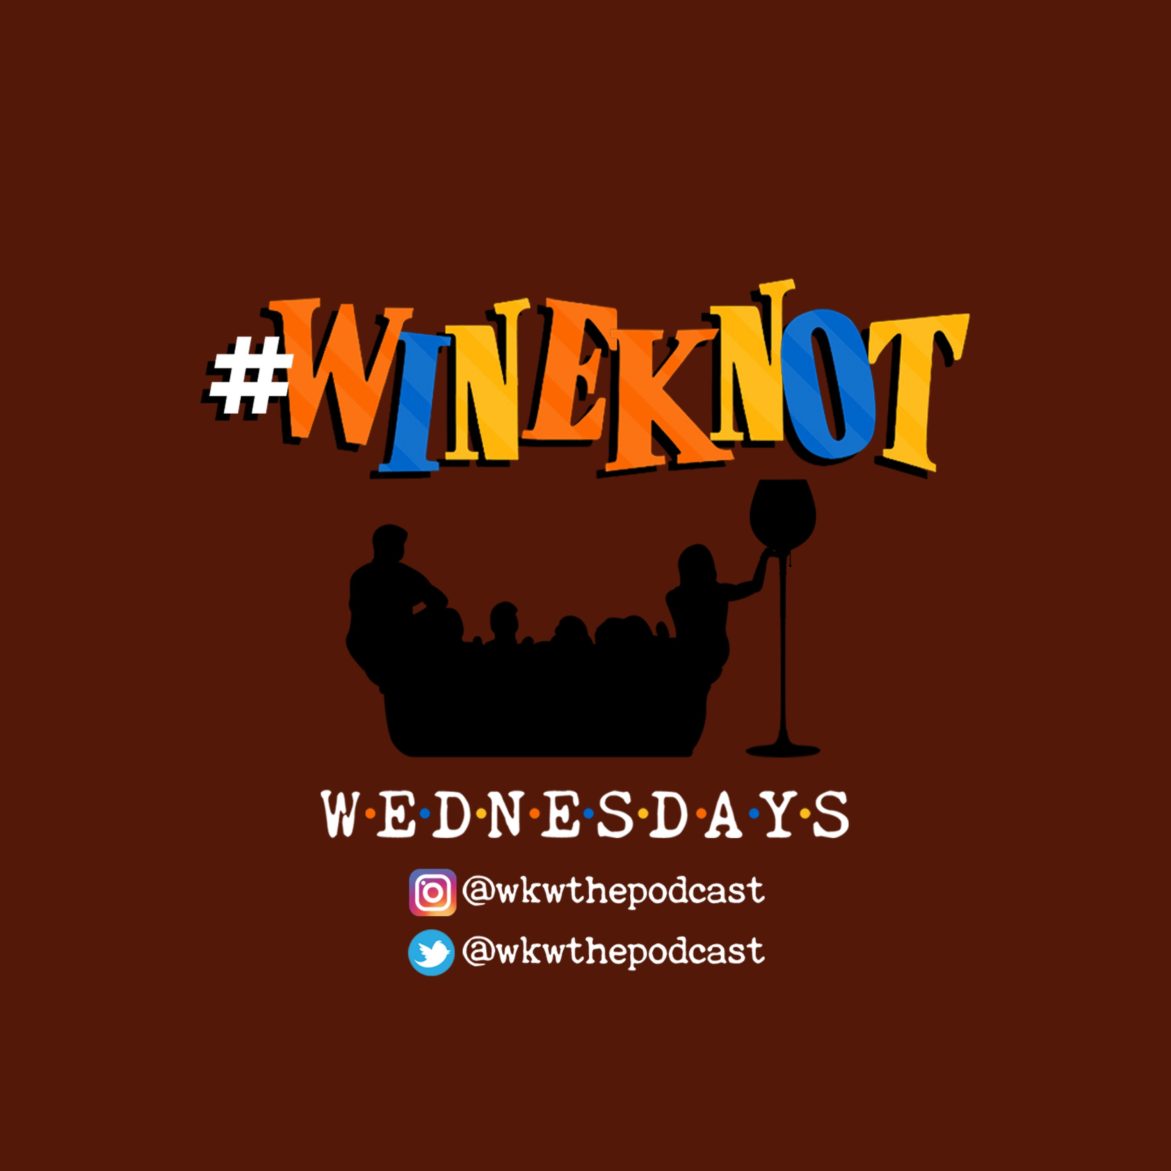 Black Podcasting - Episode 171: #WineKnotHaveABlindLove